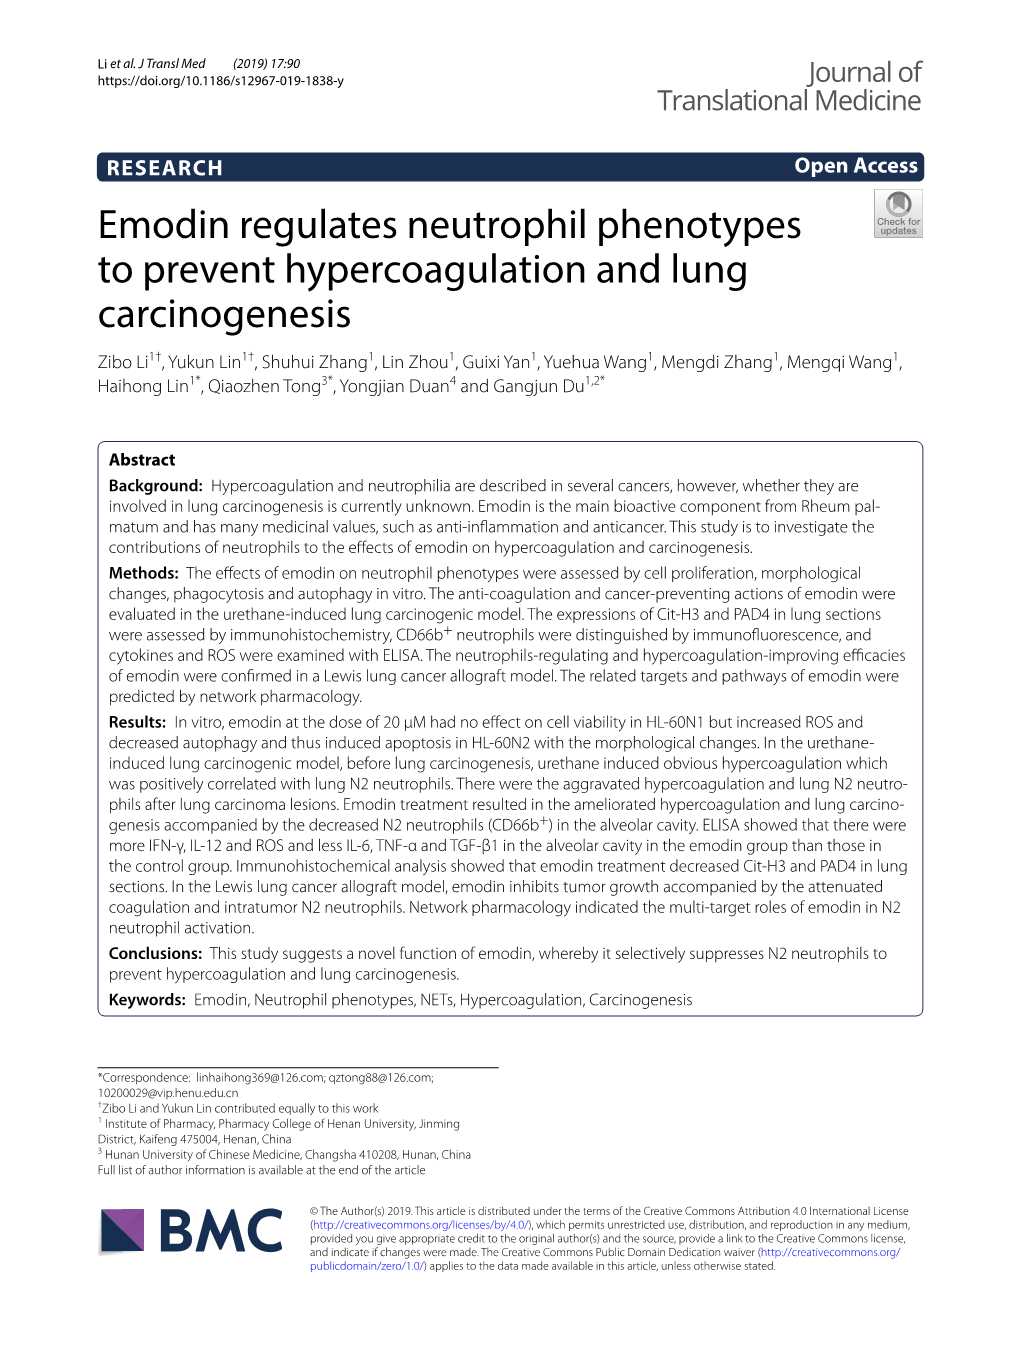 Emodin Regulates Neutrophil Phenotypes to Prevent Hypercoagulation and Lung Carcinogenesis